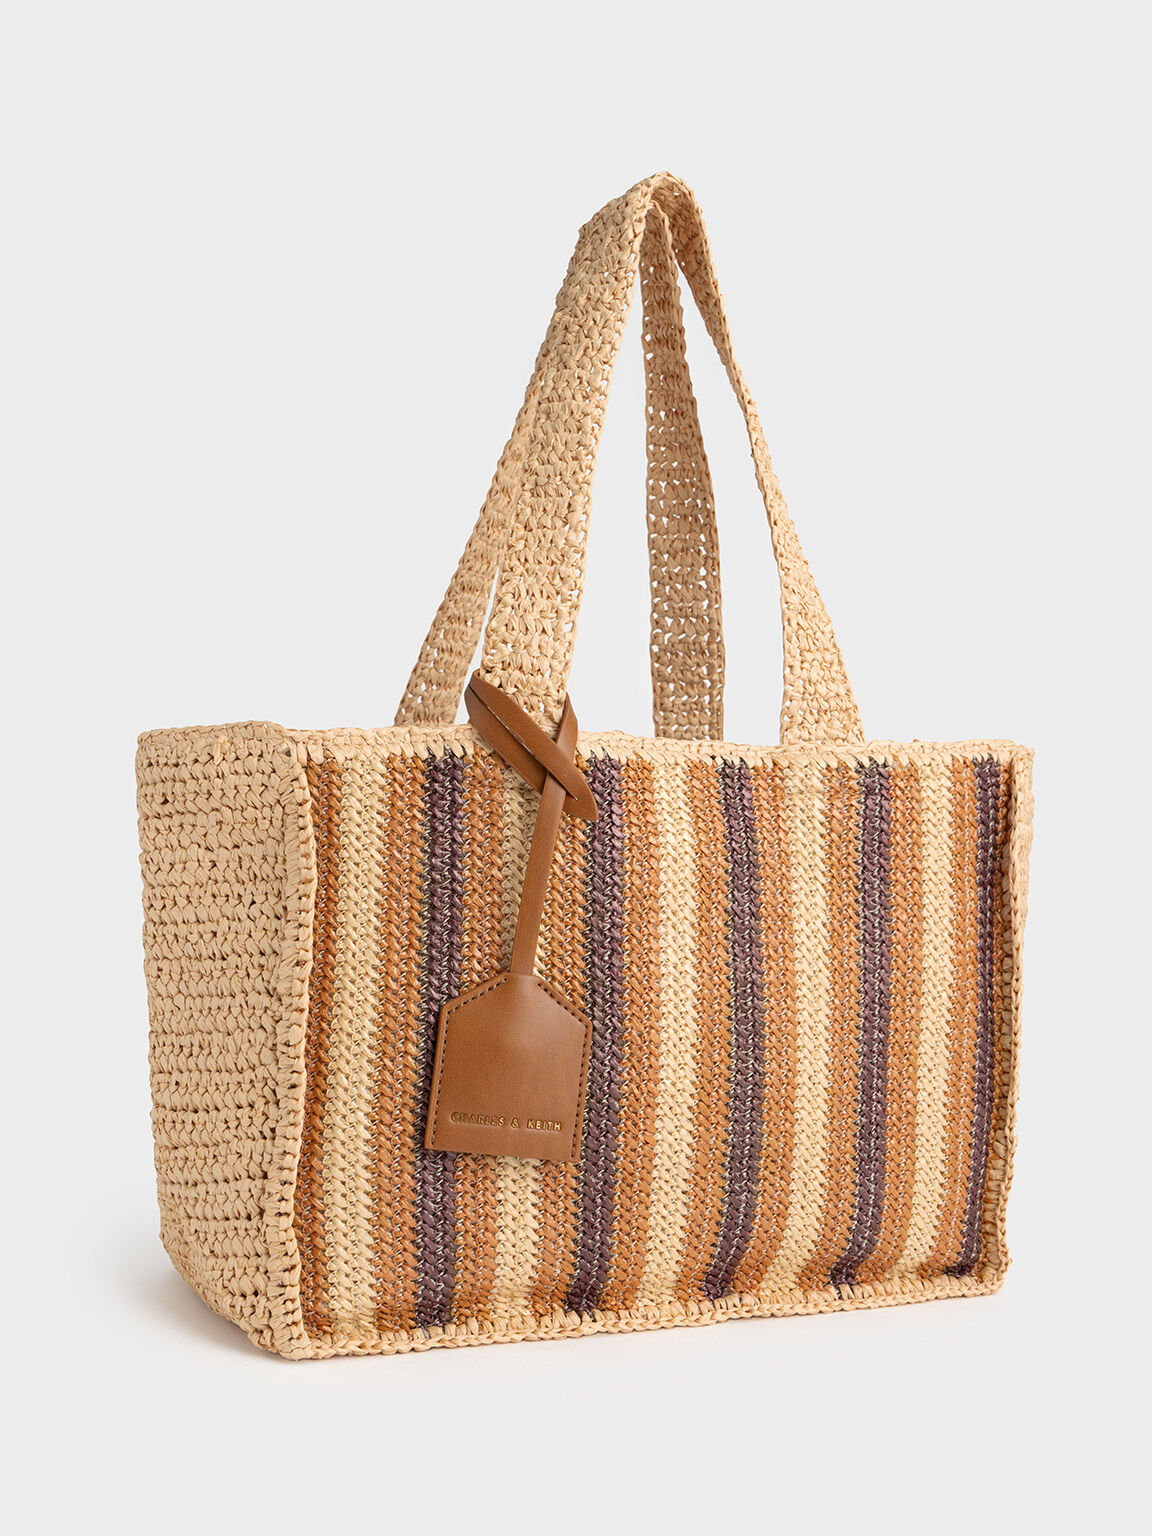 Leather Brown Straw Round Beach Bag Raffia Straw Tote Bag with